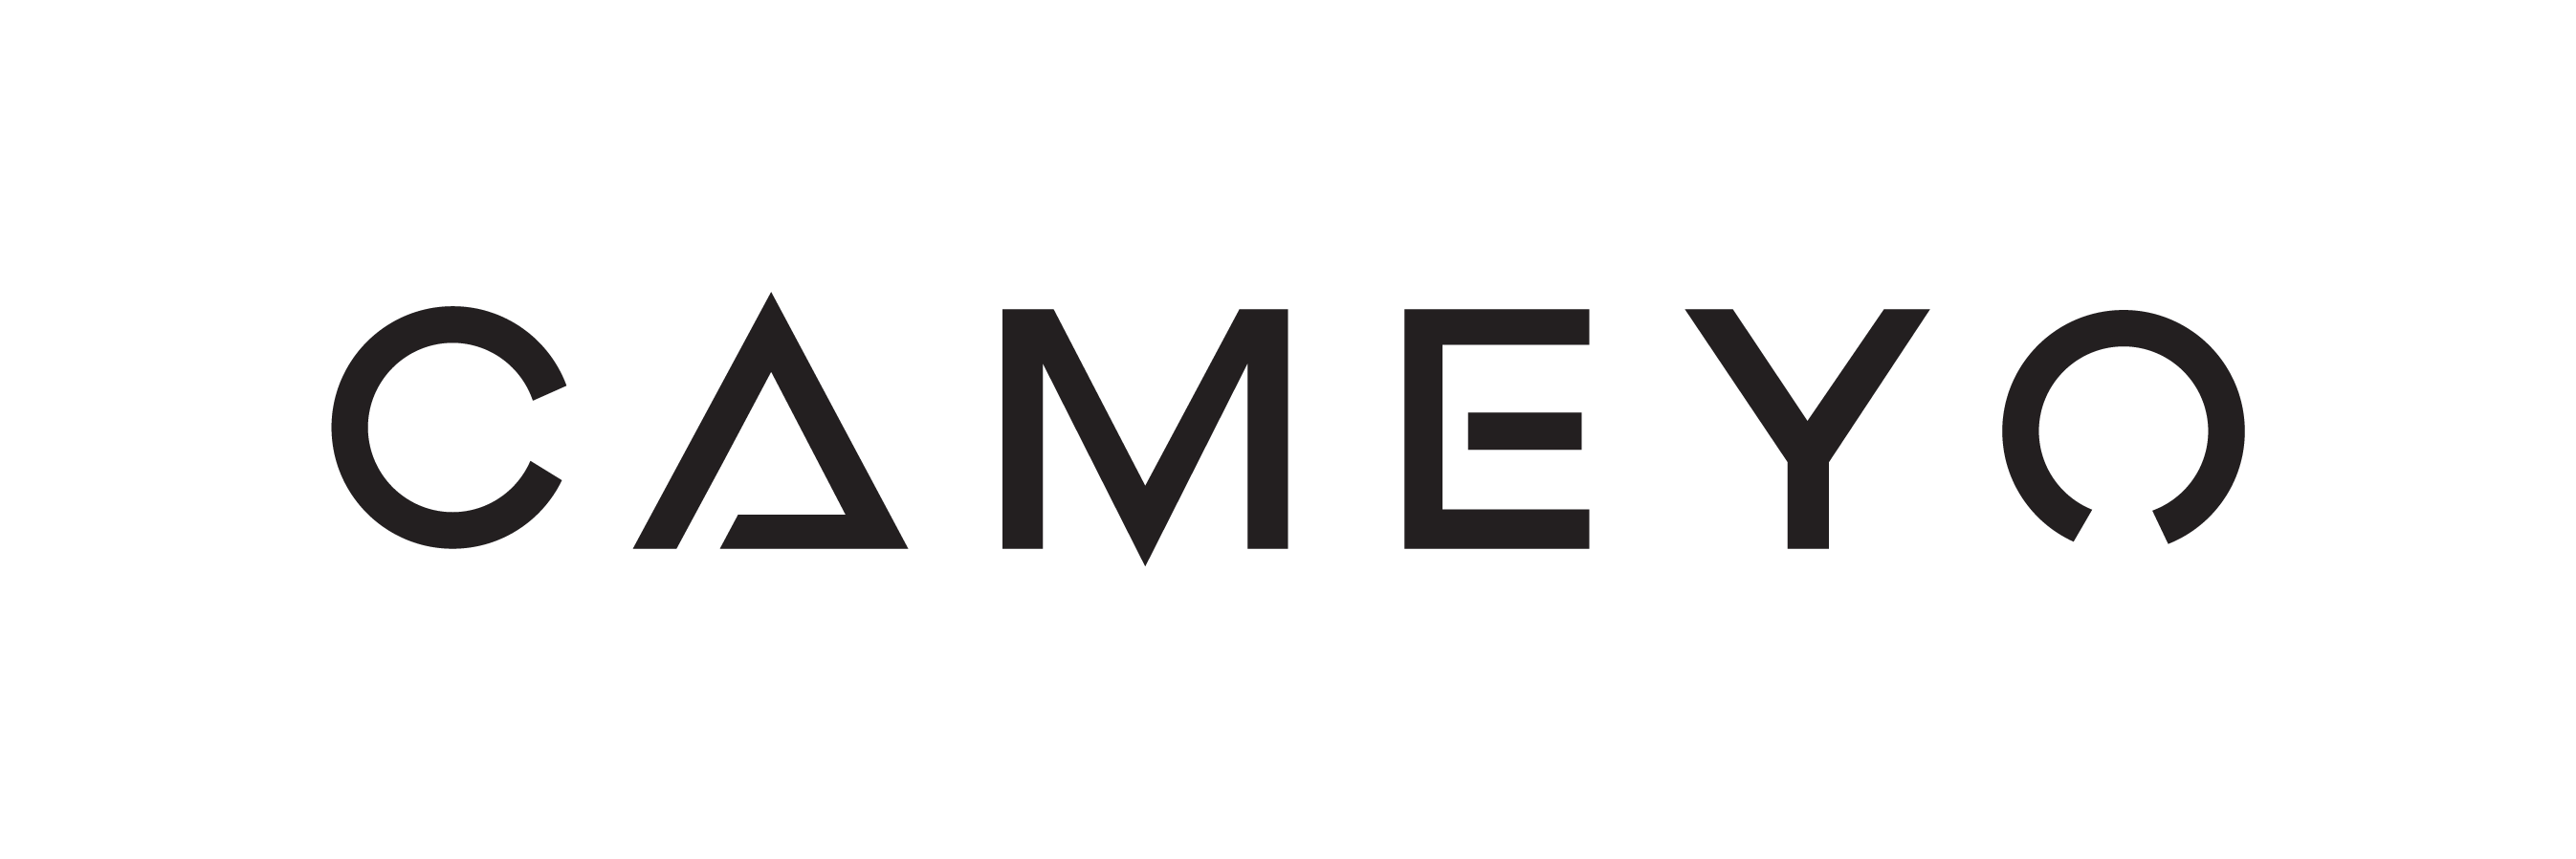 Cameyo_black_logo-01